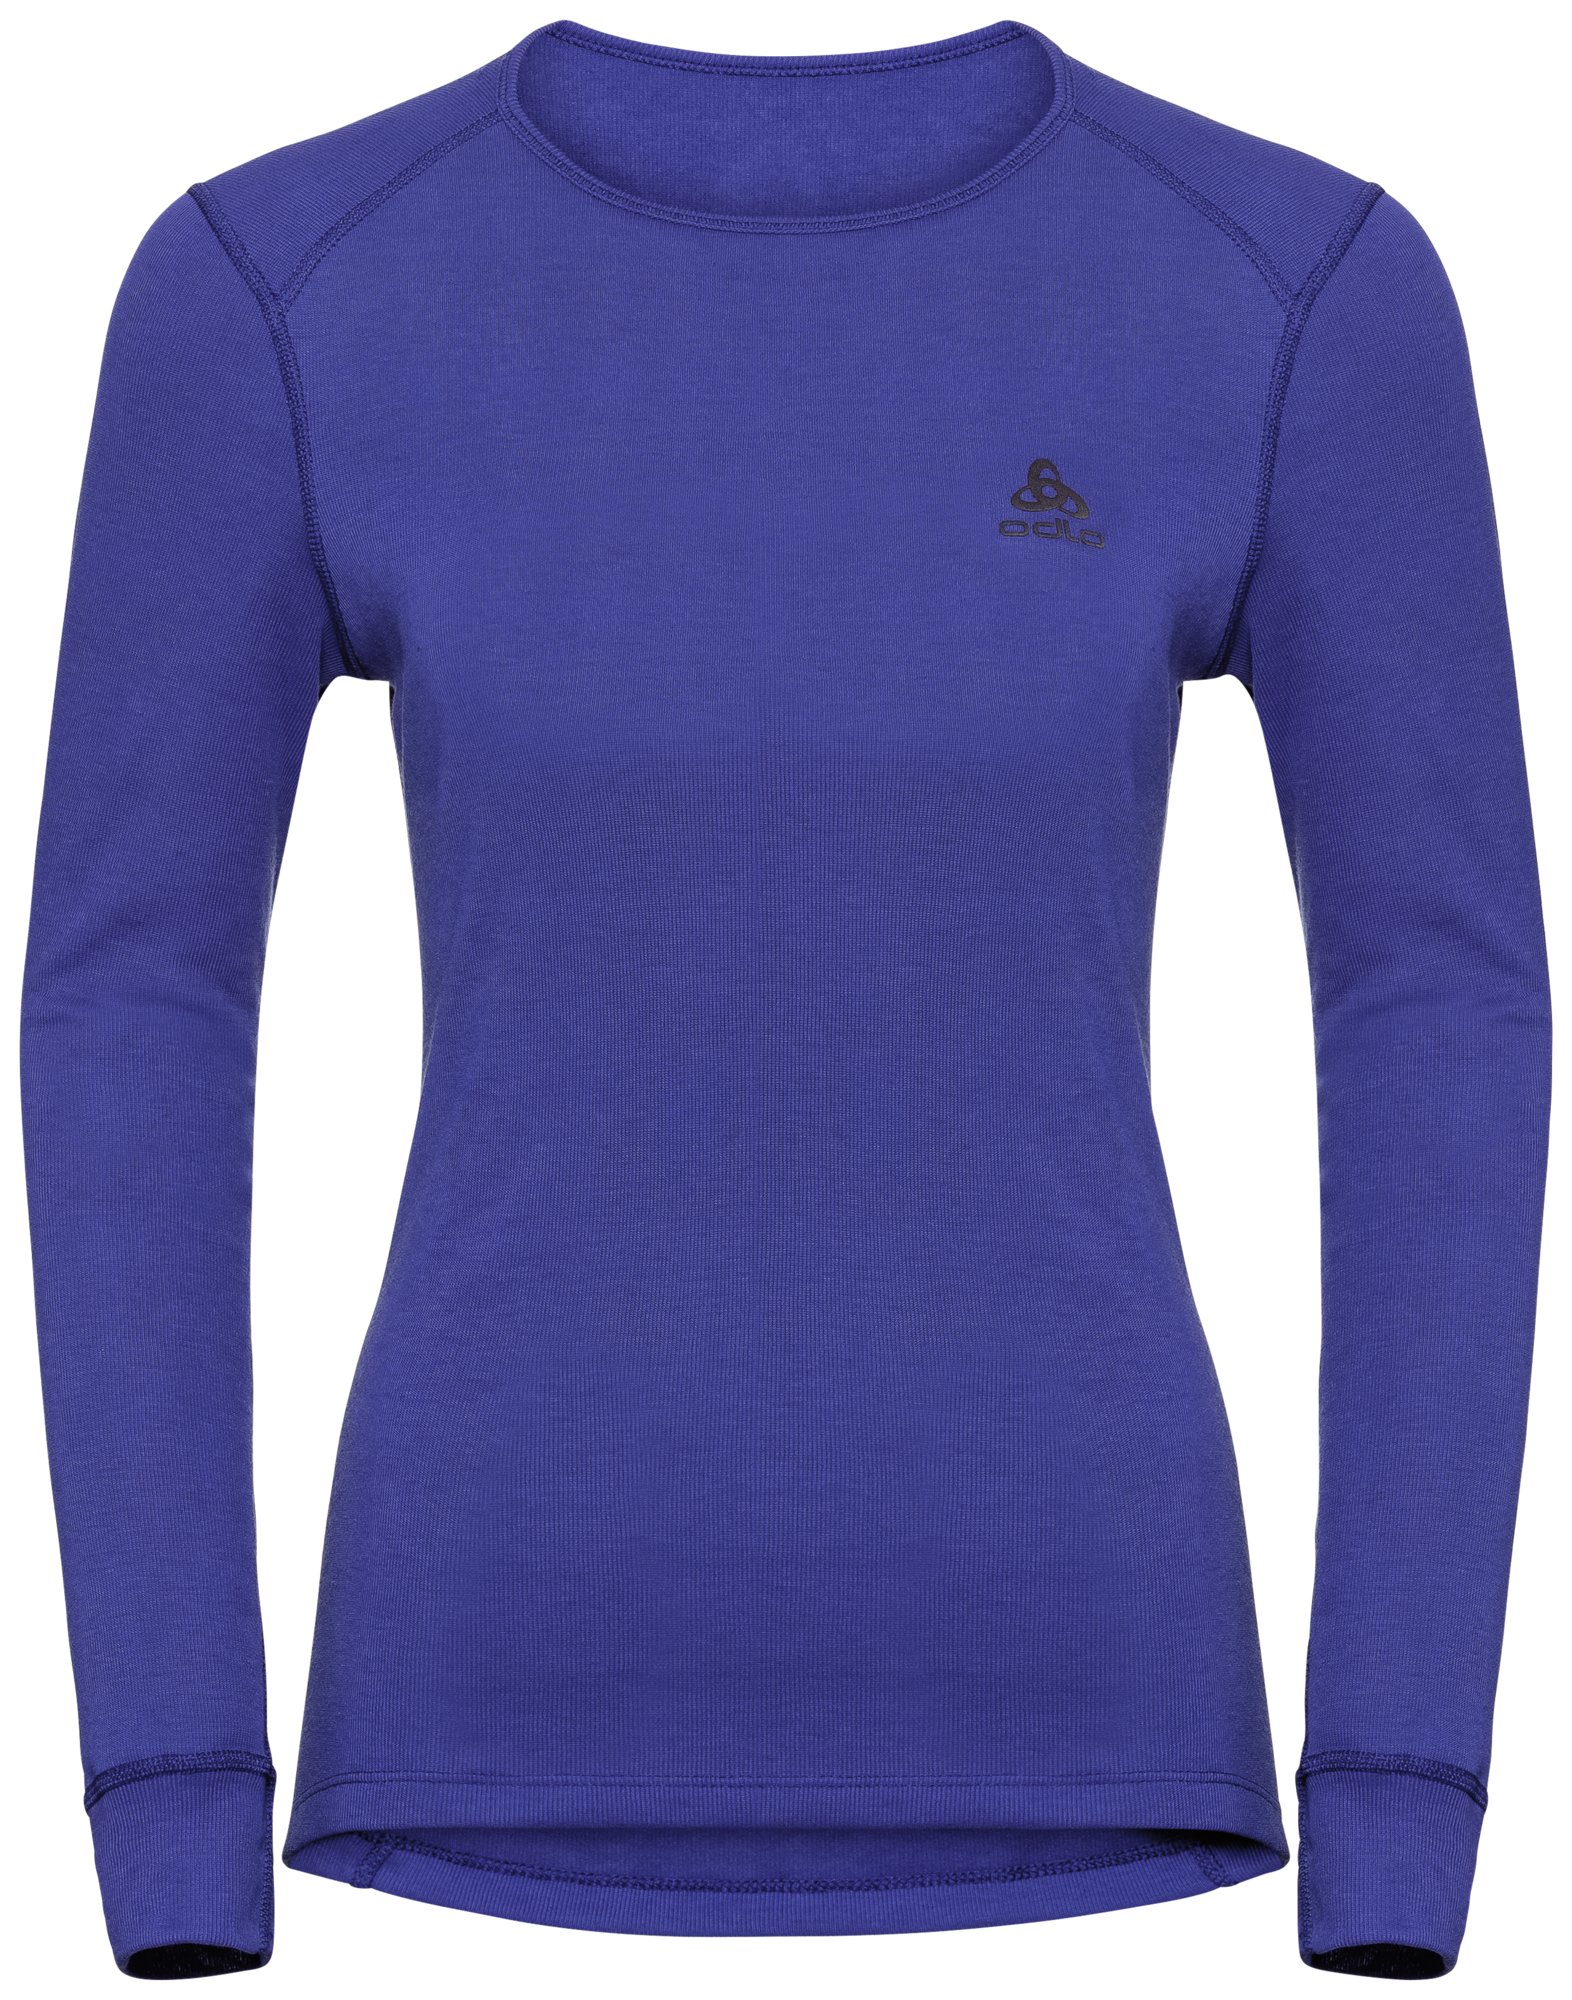 Odlo ACTIVE WARM Damen Funktionsunterwäsche Langarm-Shirt - blau